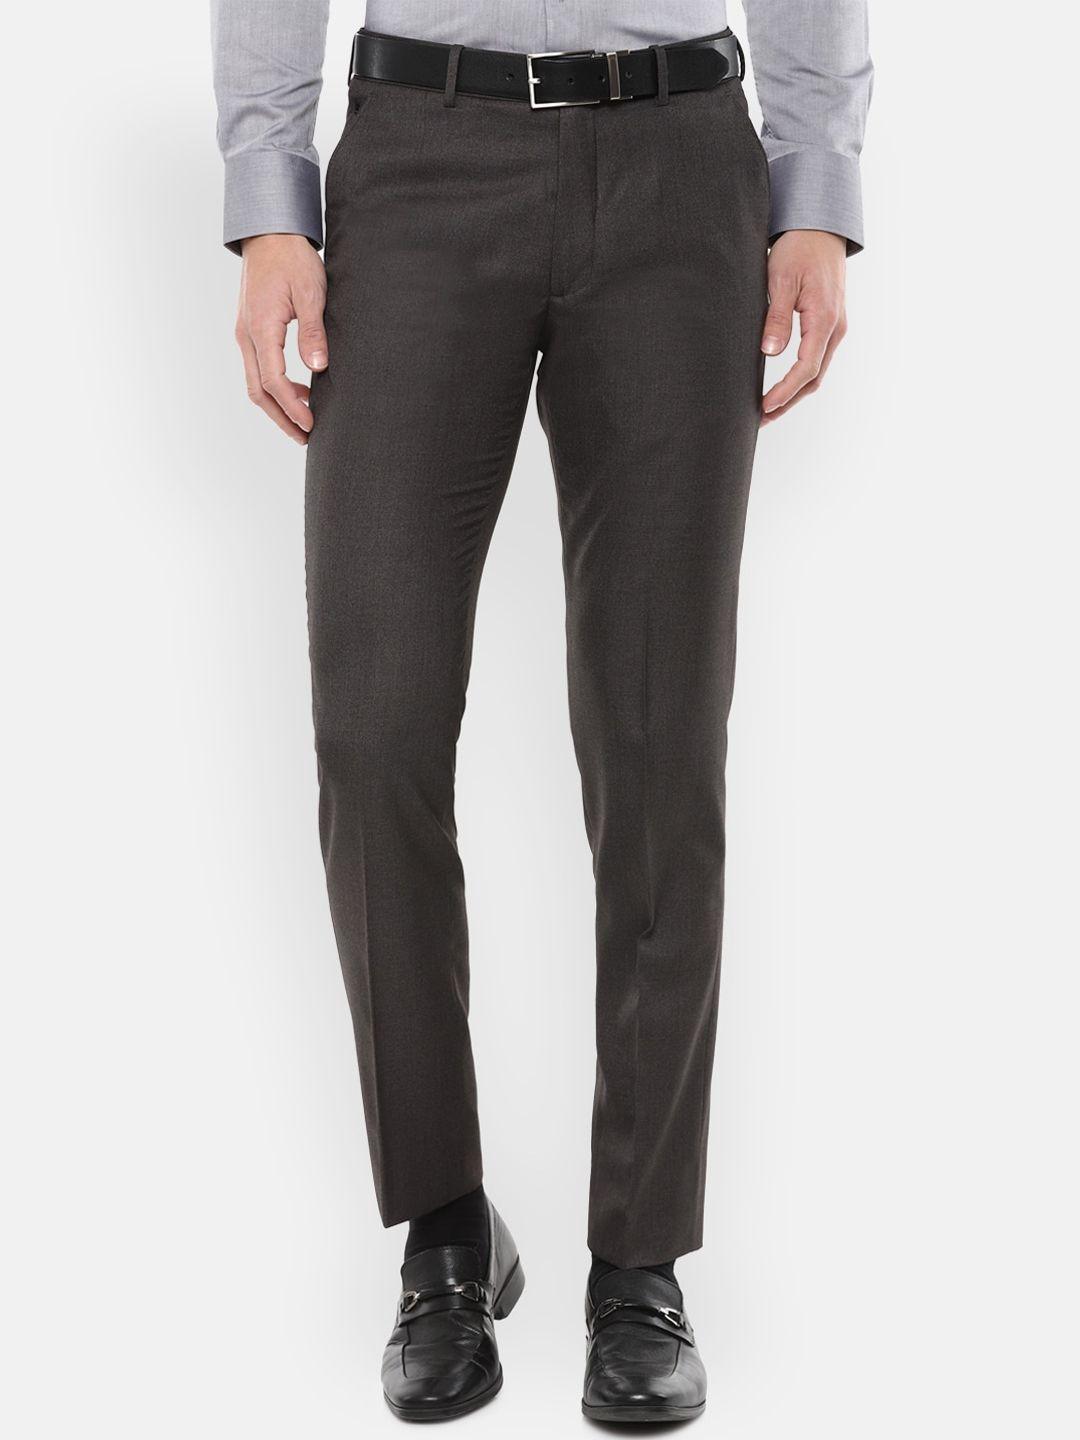 louis philippe men grey textured slim fit trousers